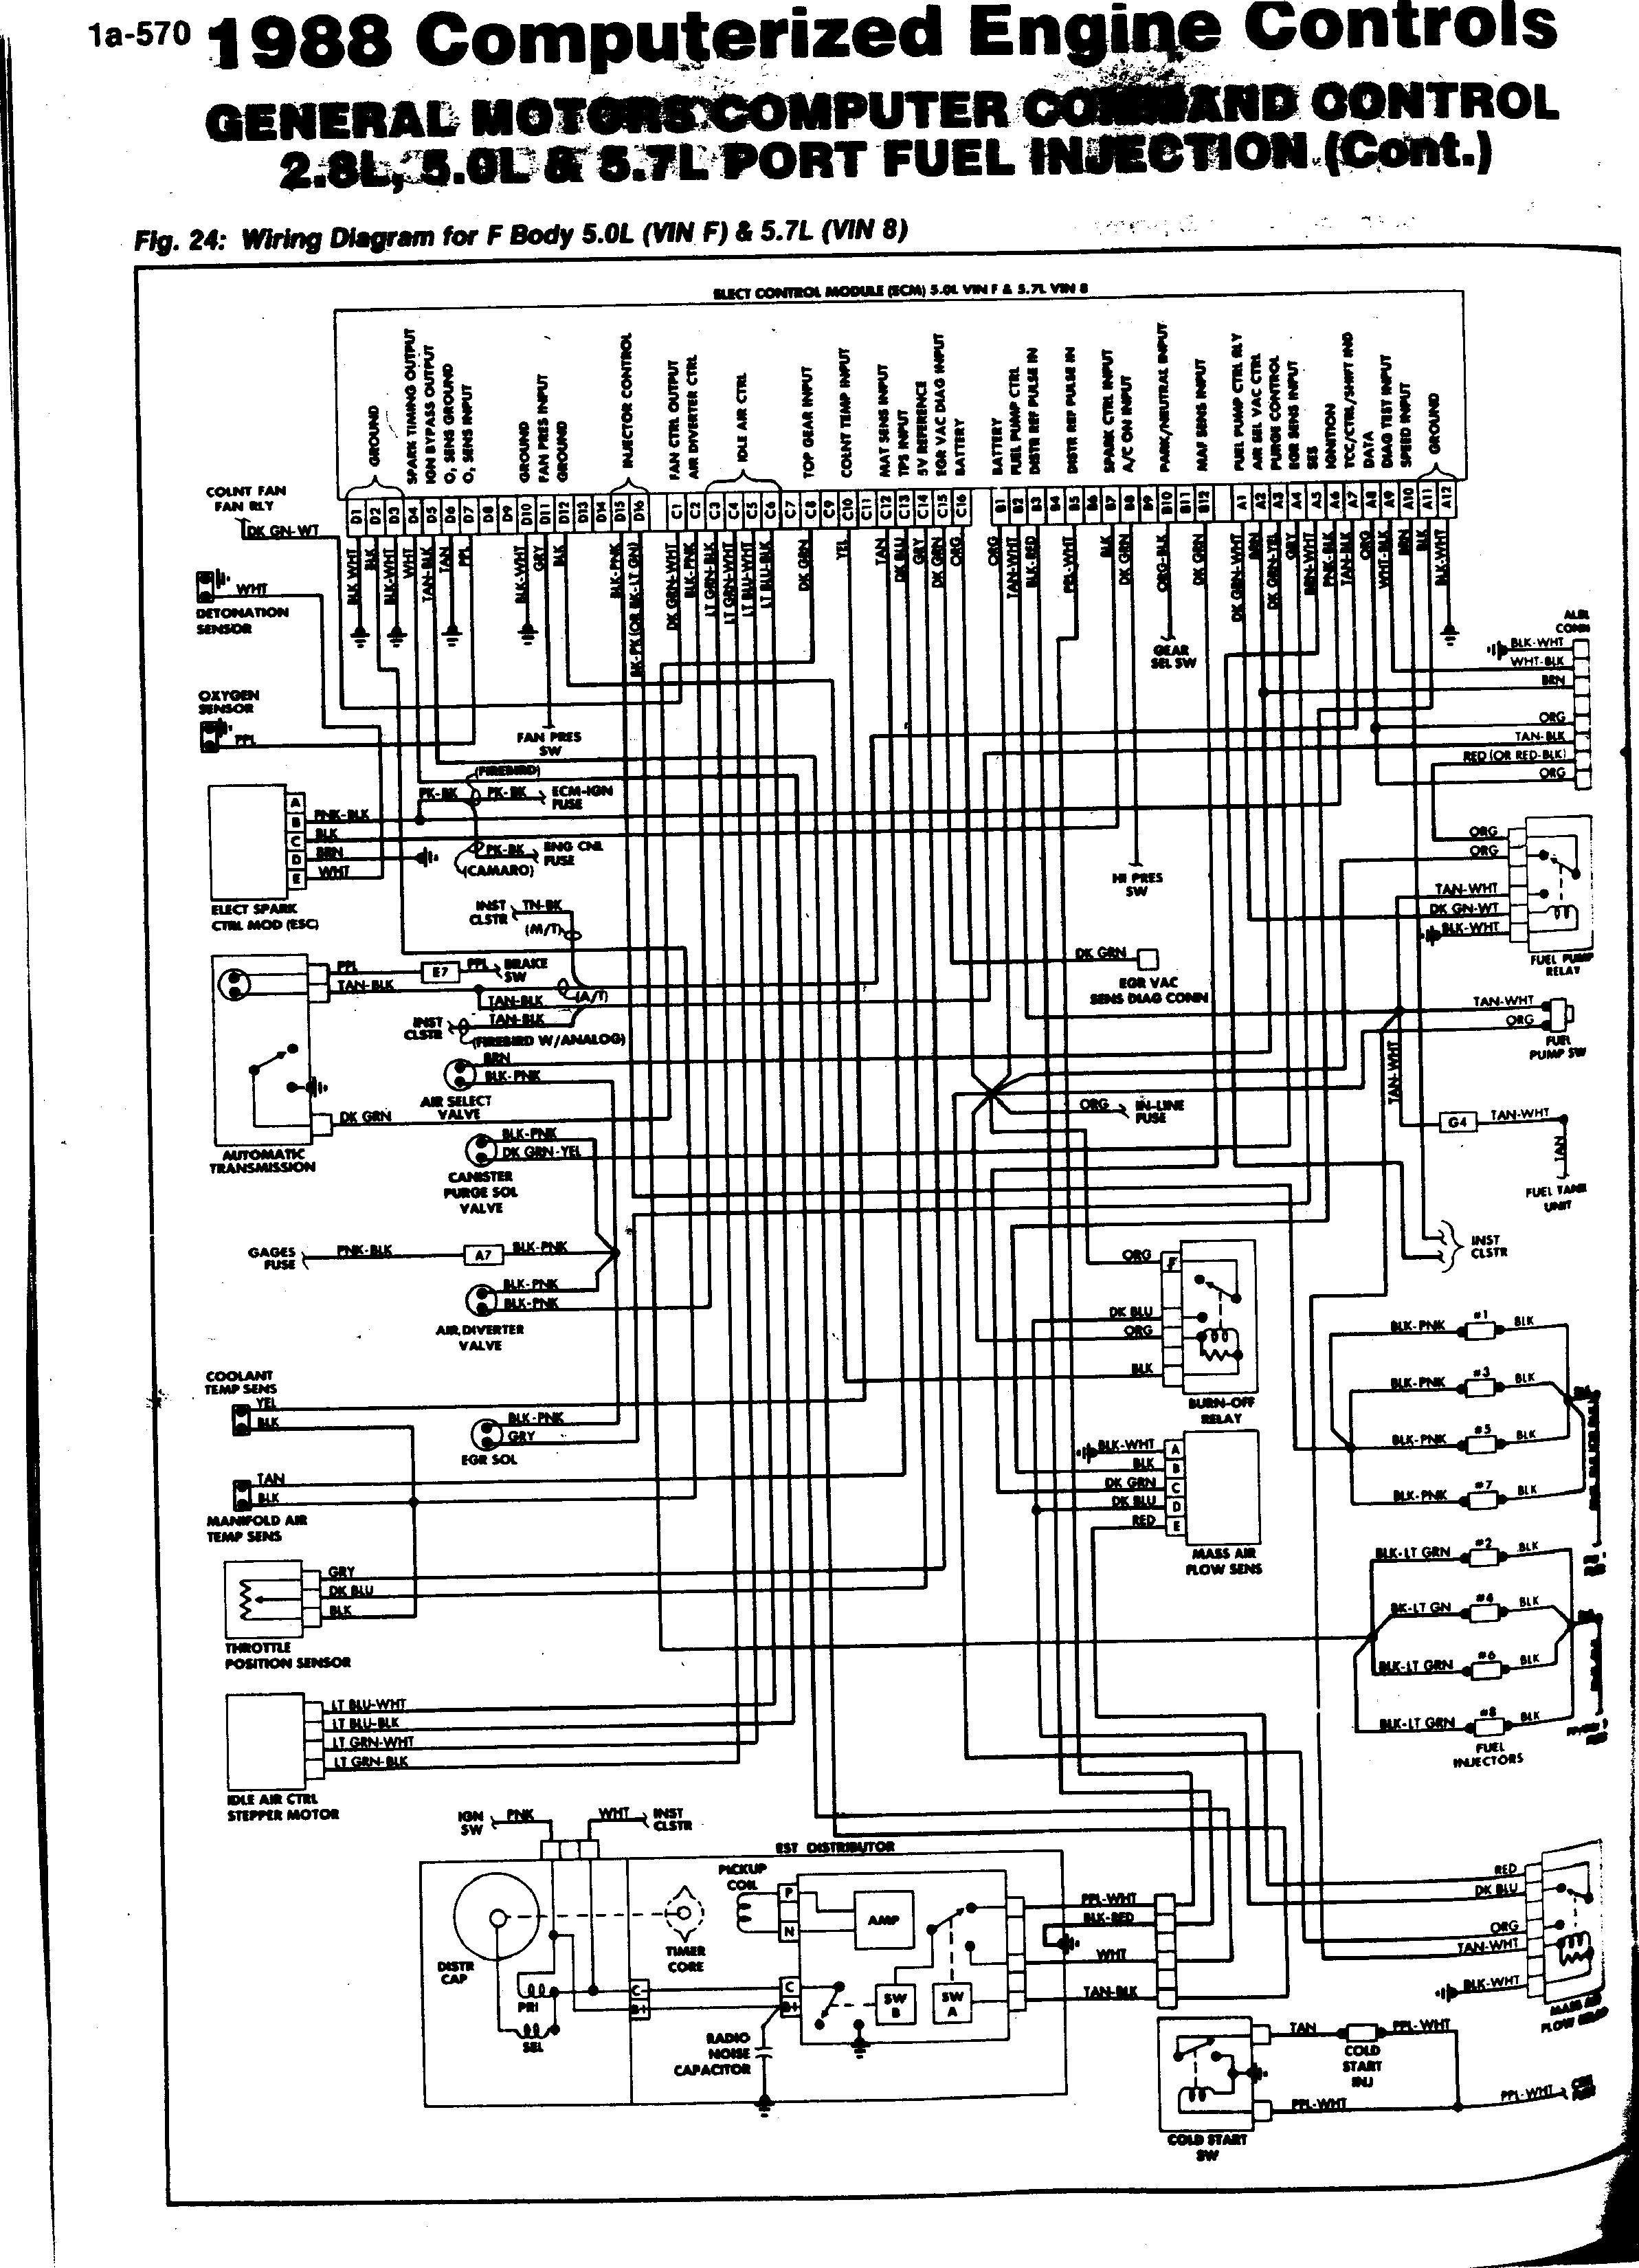 Engine Wiring Diagram Wiring Diagram for Automotive Best 1989 Camaro Wiring Diagram 1989 Of Engine Wiring Diagram